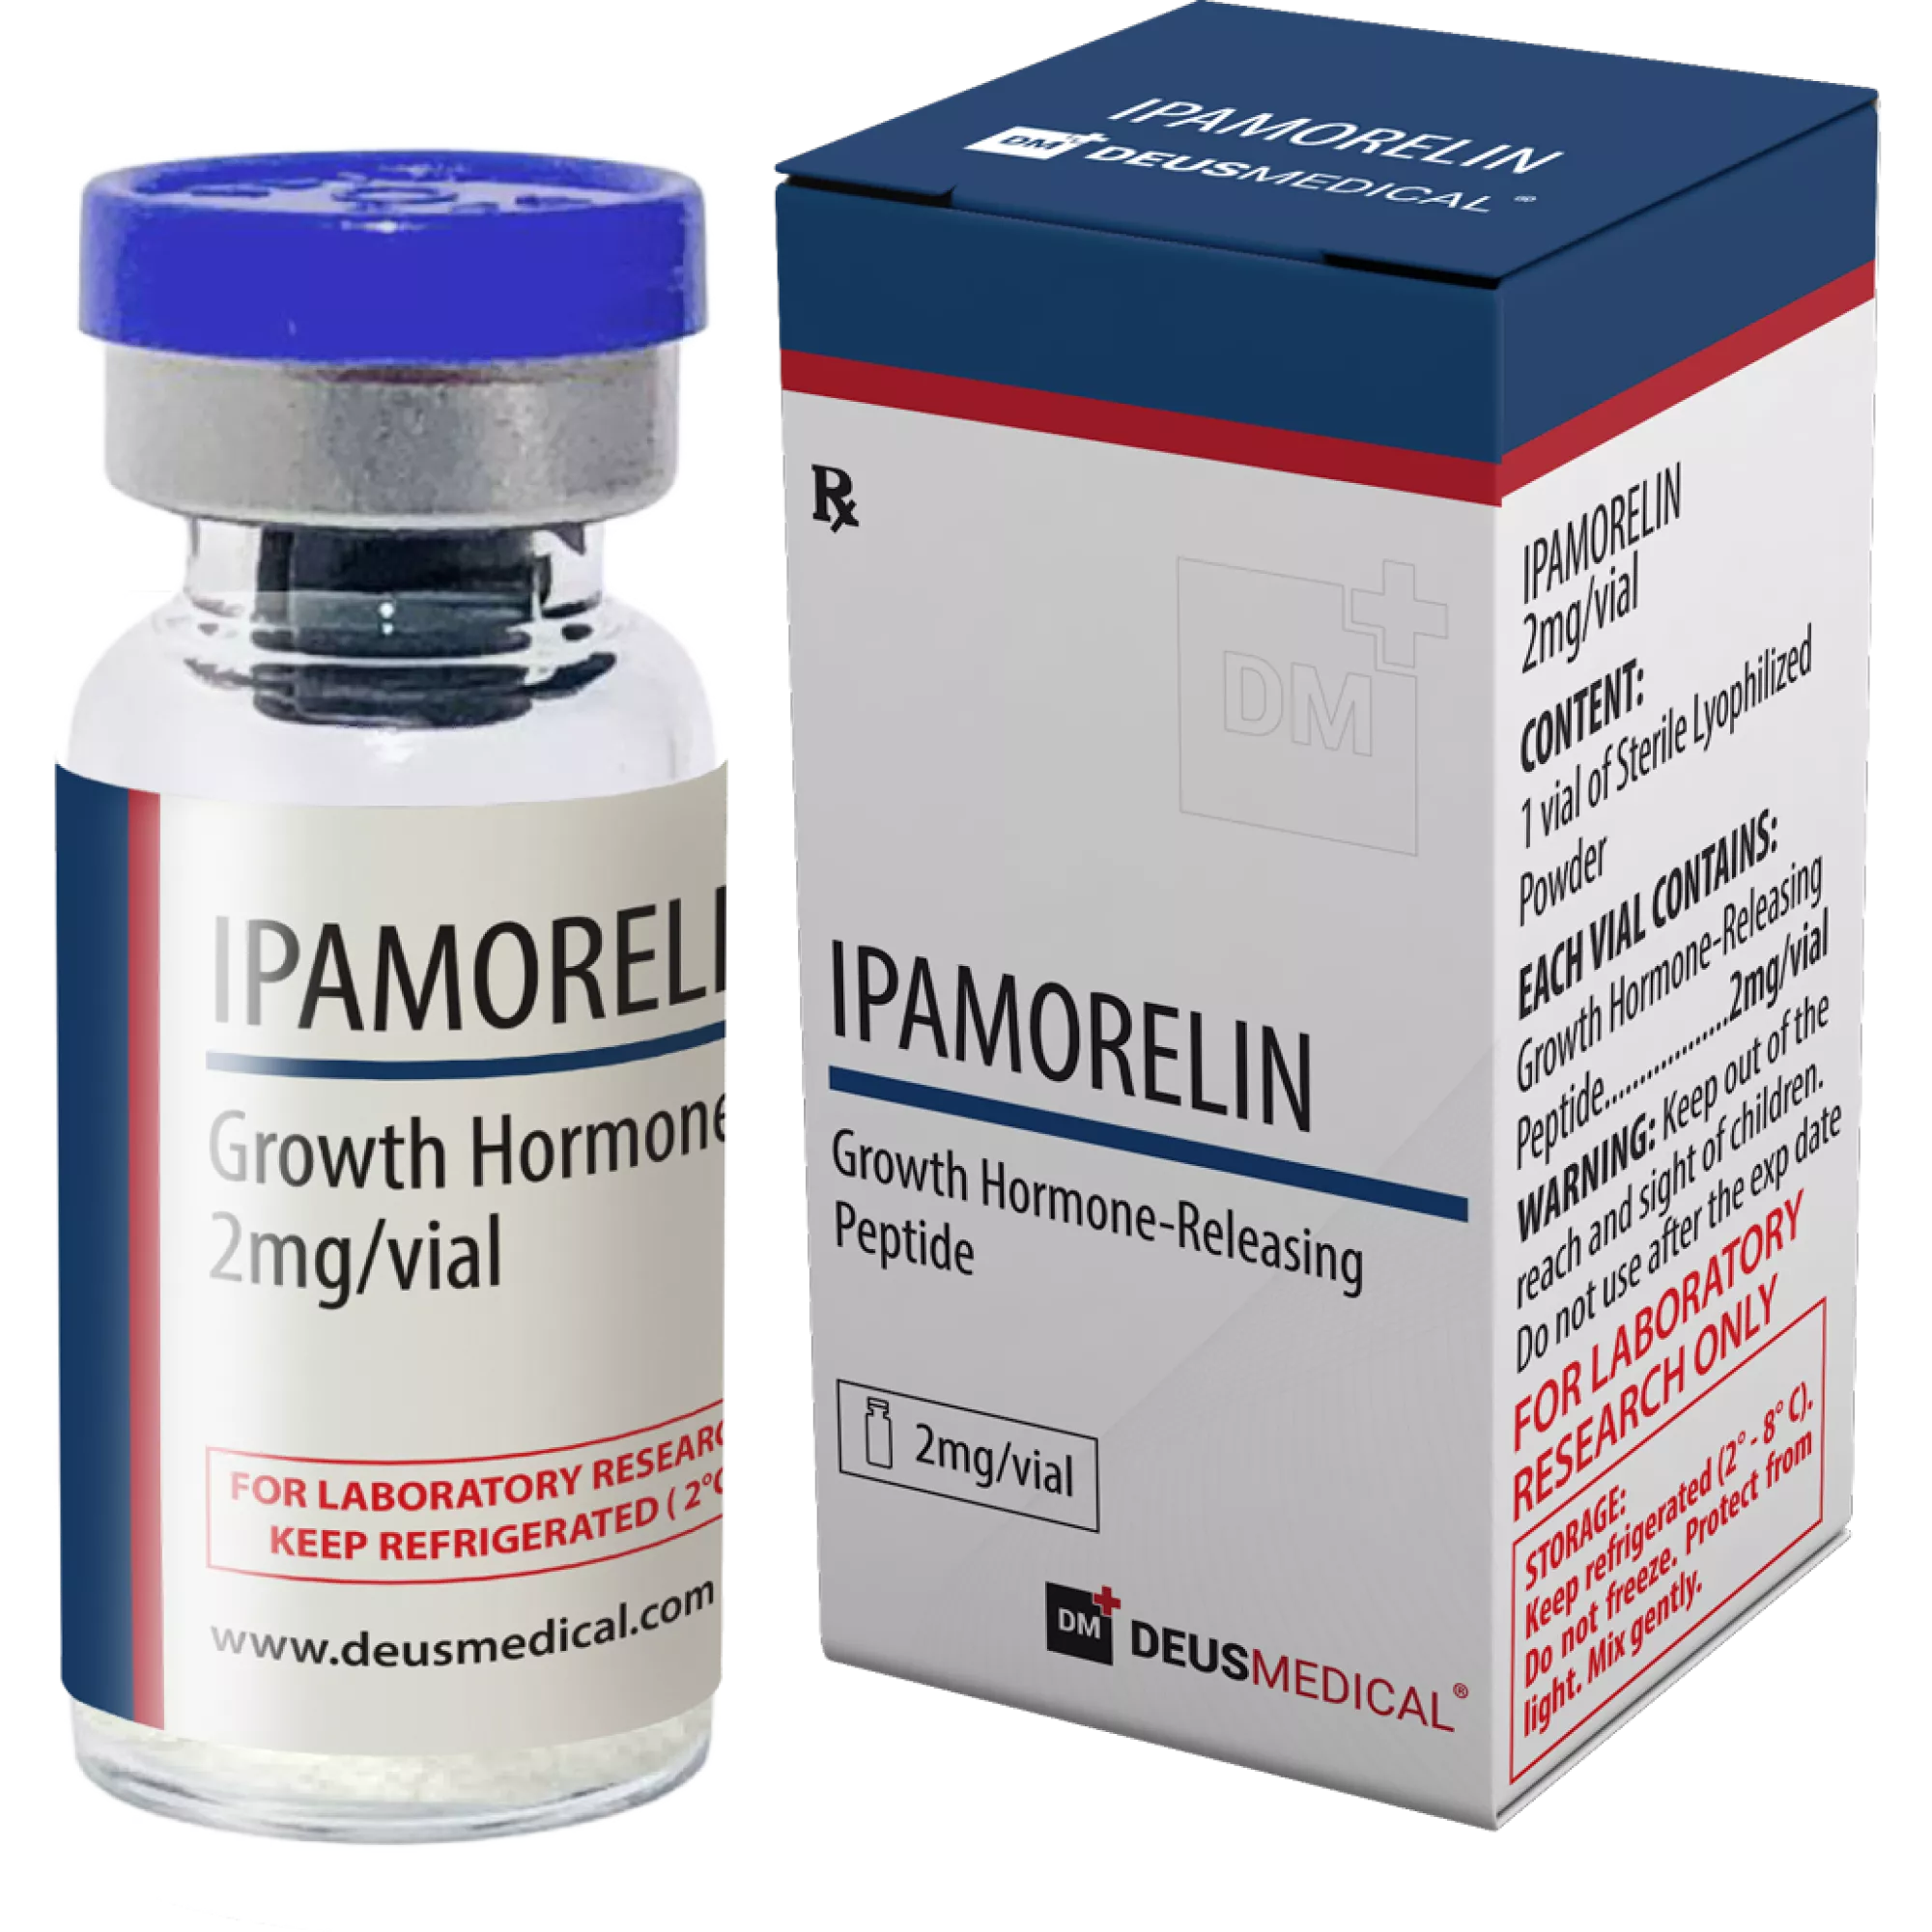 IPAMORELIN (Growth Hormone-Releasing Peptide), Deus Medical, Buy Steroids Online - www.deuspower.shop